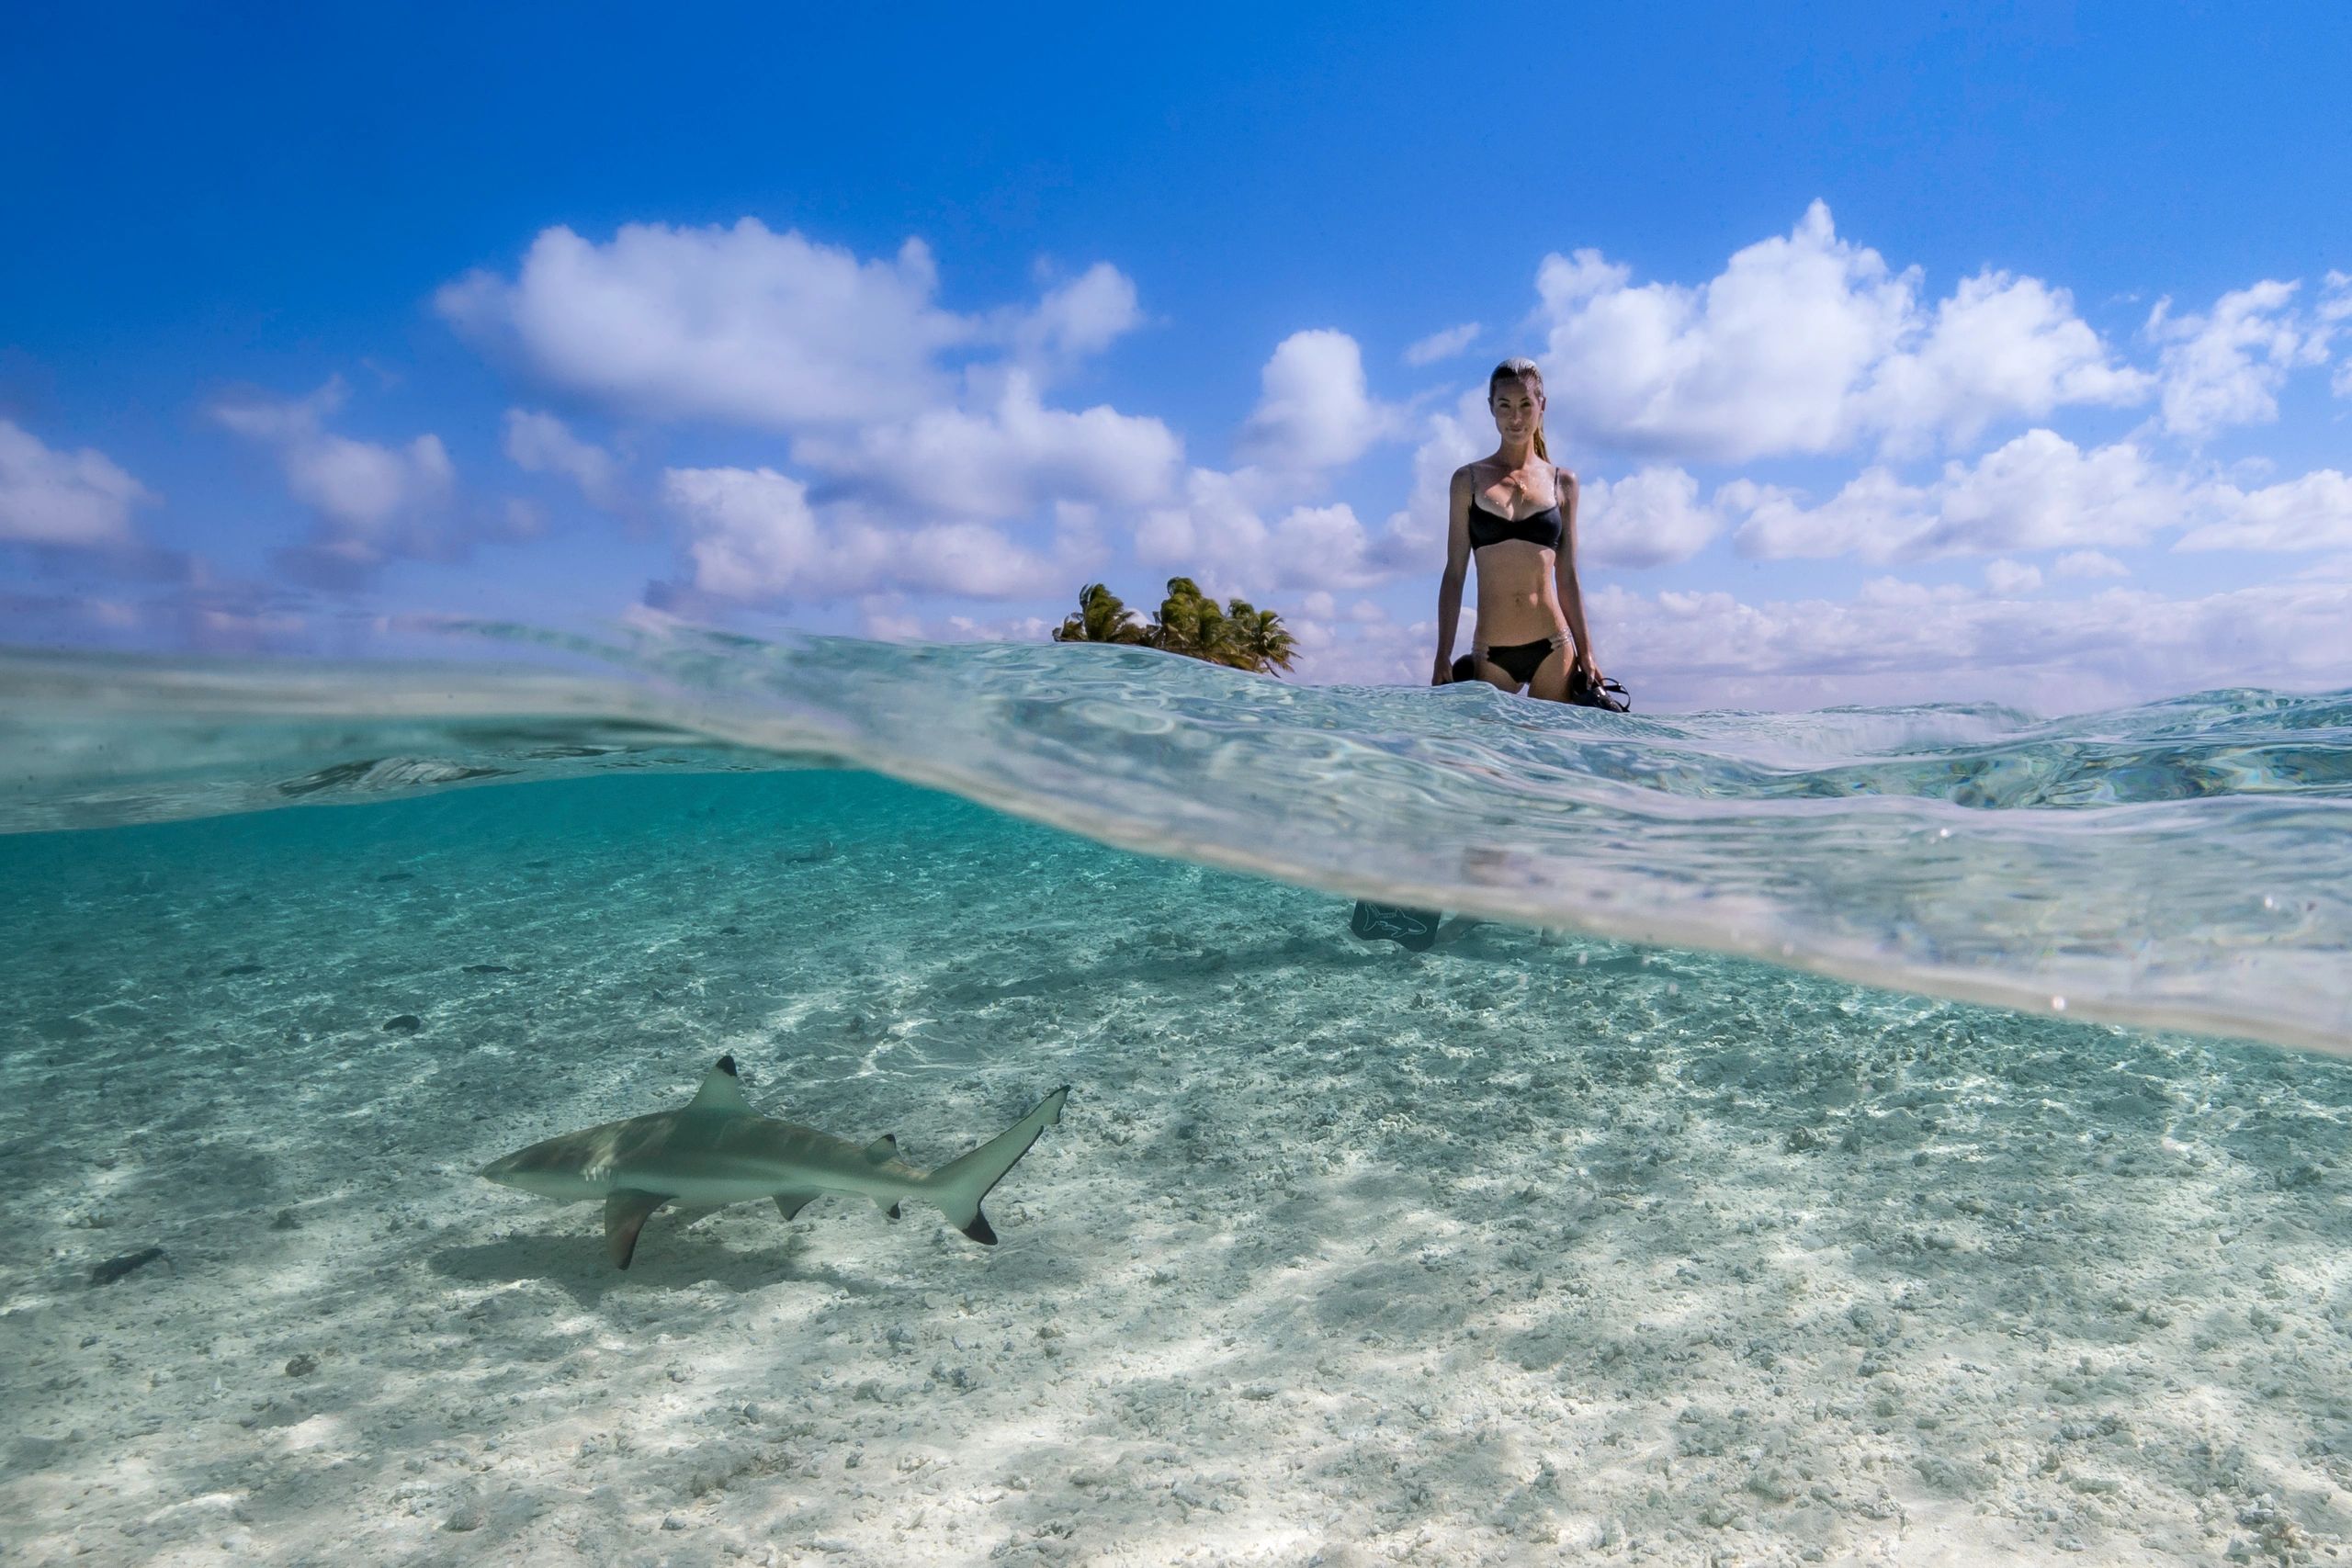 Ocean Ramsey with a Shark in a Bikini over-under shot